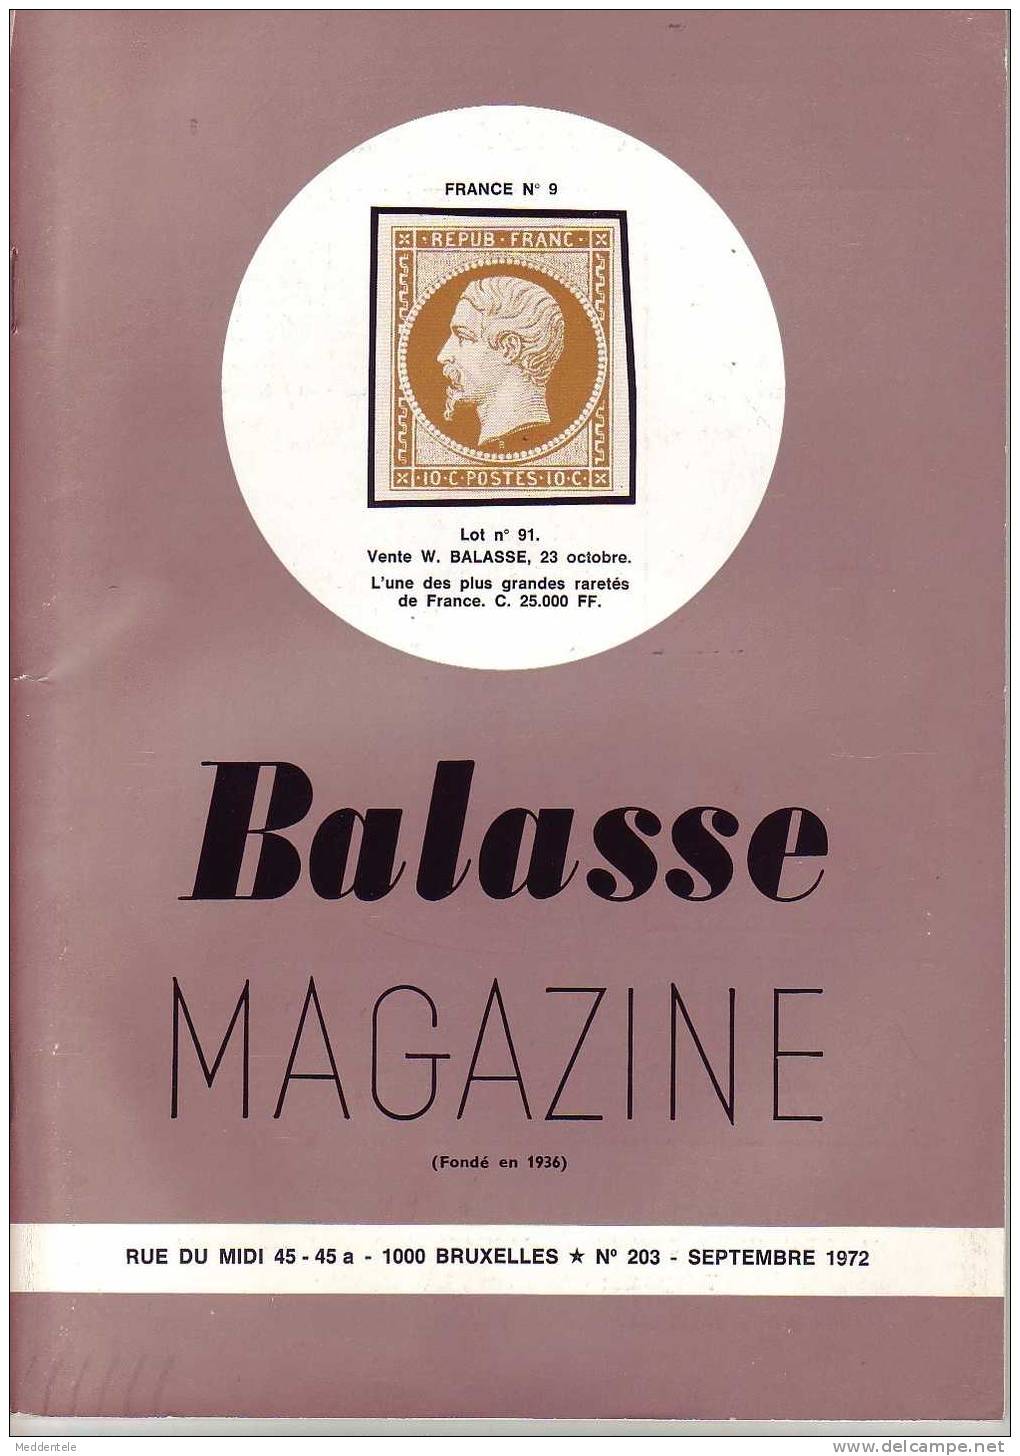 BALASSE MAGAZINE N° 203 - French (from 1941)